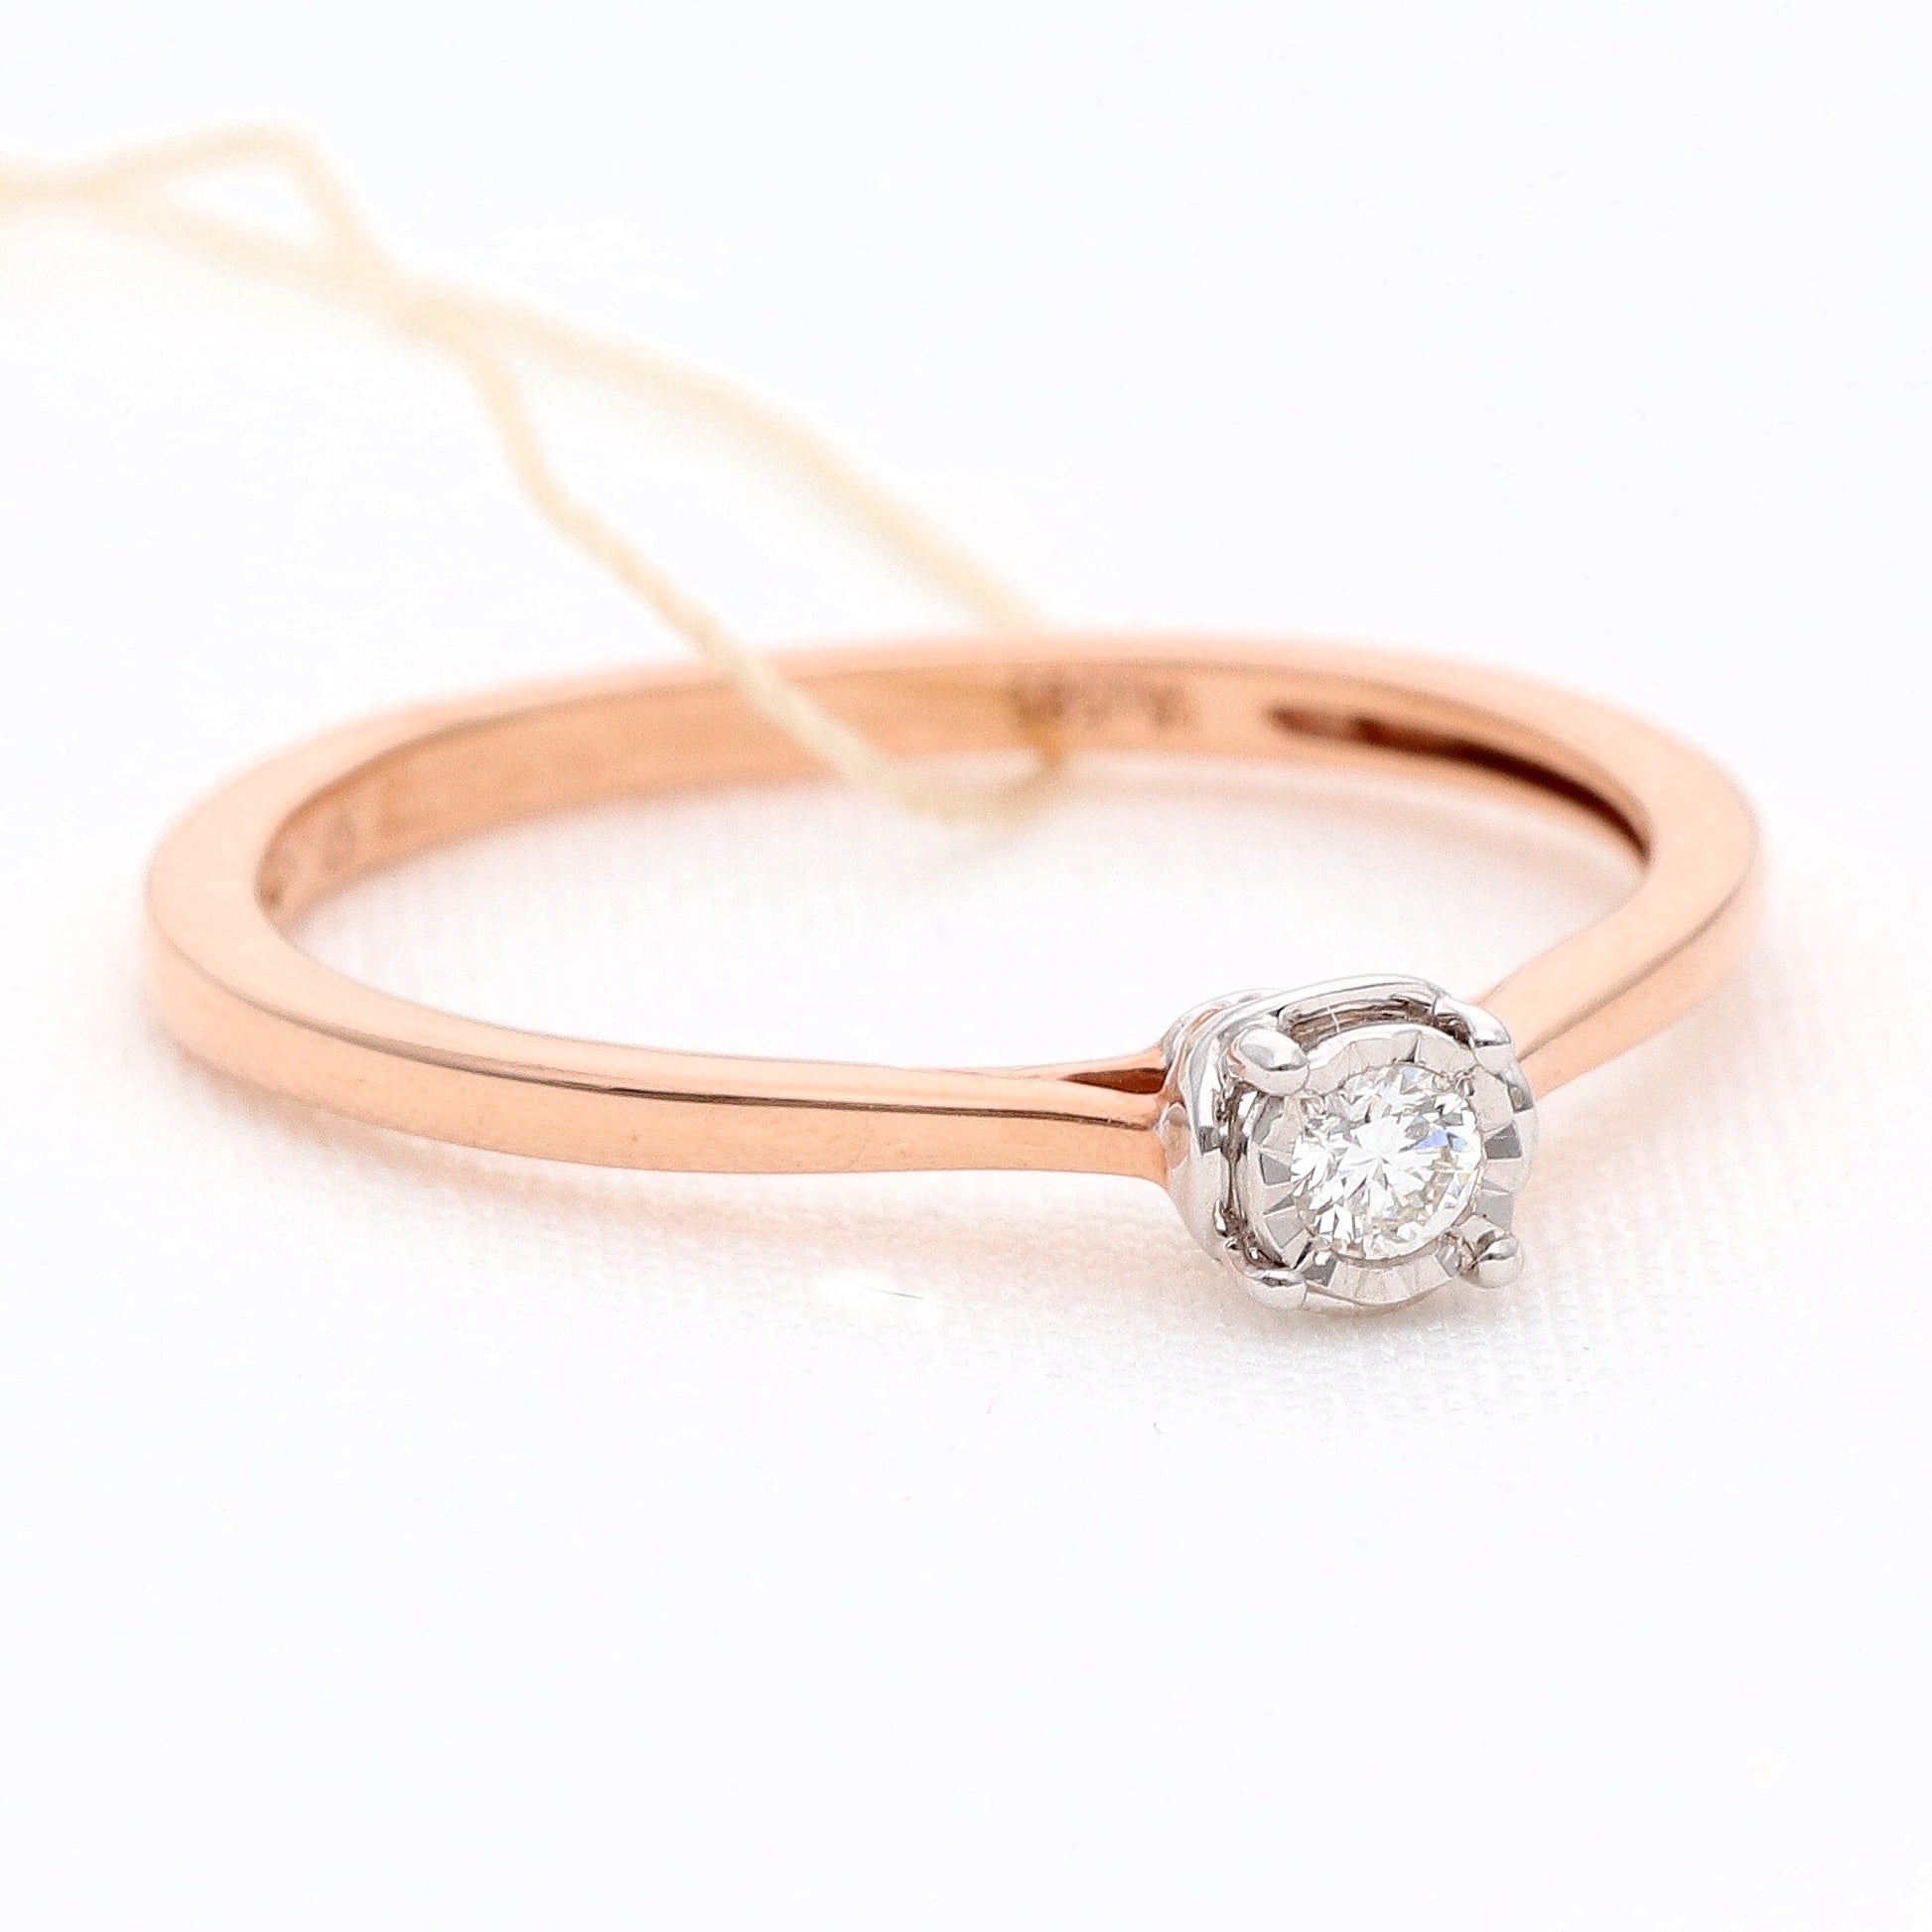 Auksinis žiedas su deimantu 0,05ct vestuviniaiziedai.lt